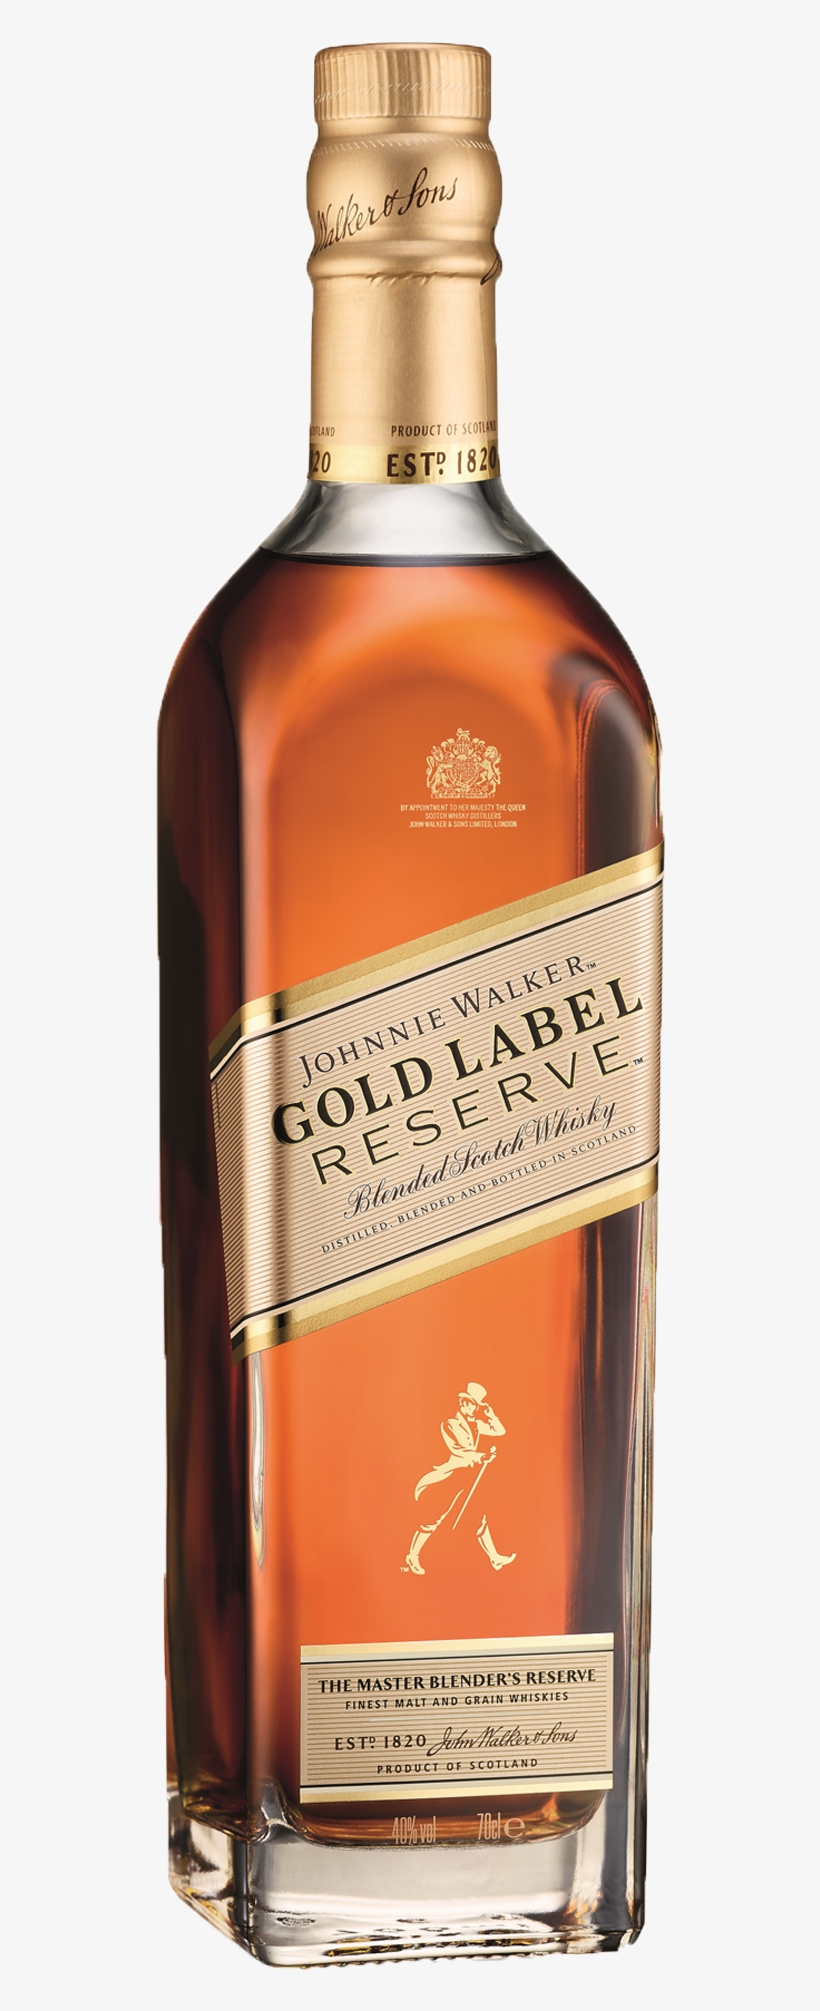 Johnnie Walker Gold Label Reserve Scotch Whisky 700ml - Johnnie Walker, transparent png #3158562